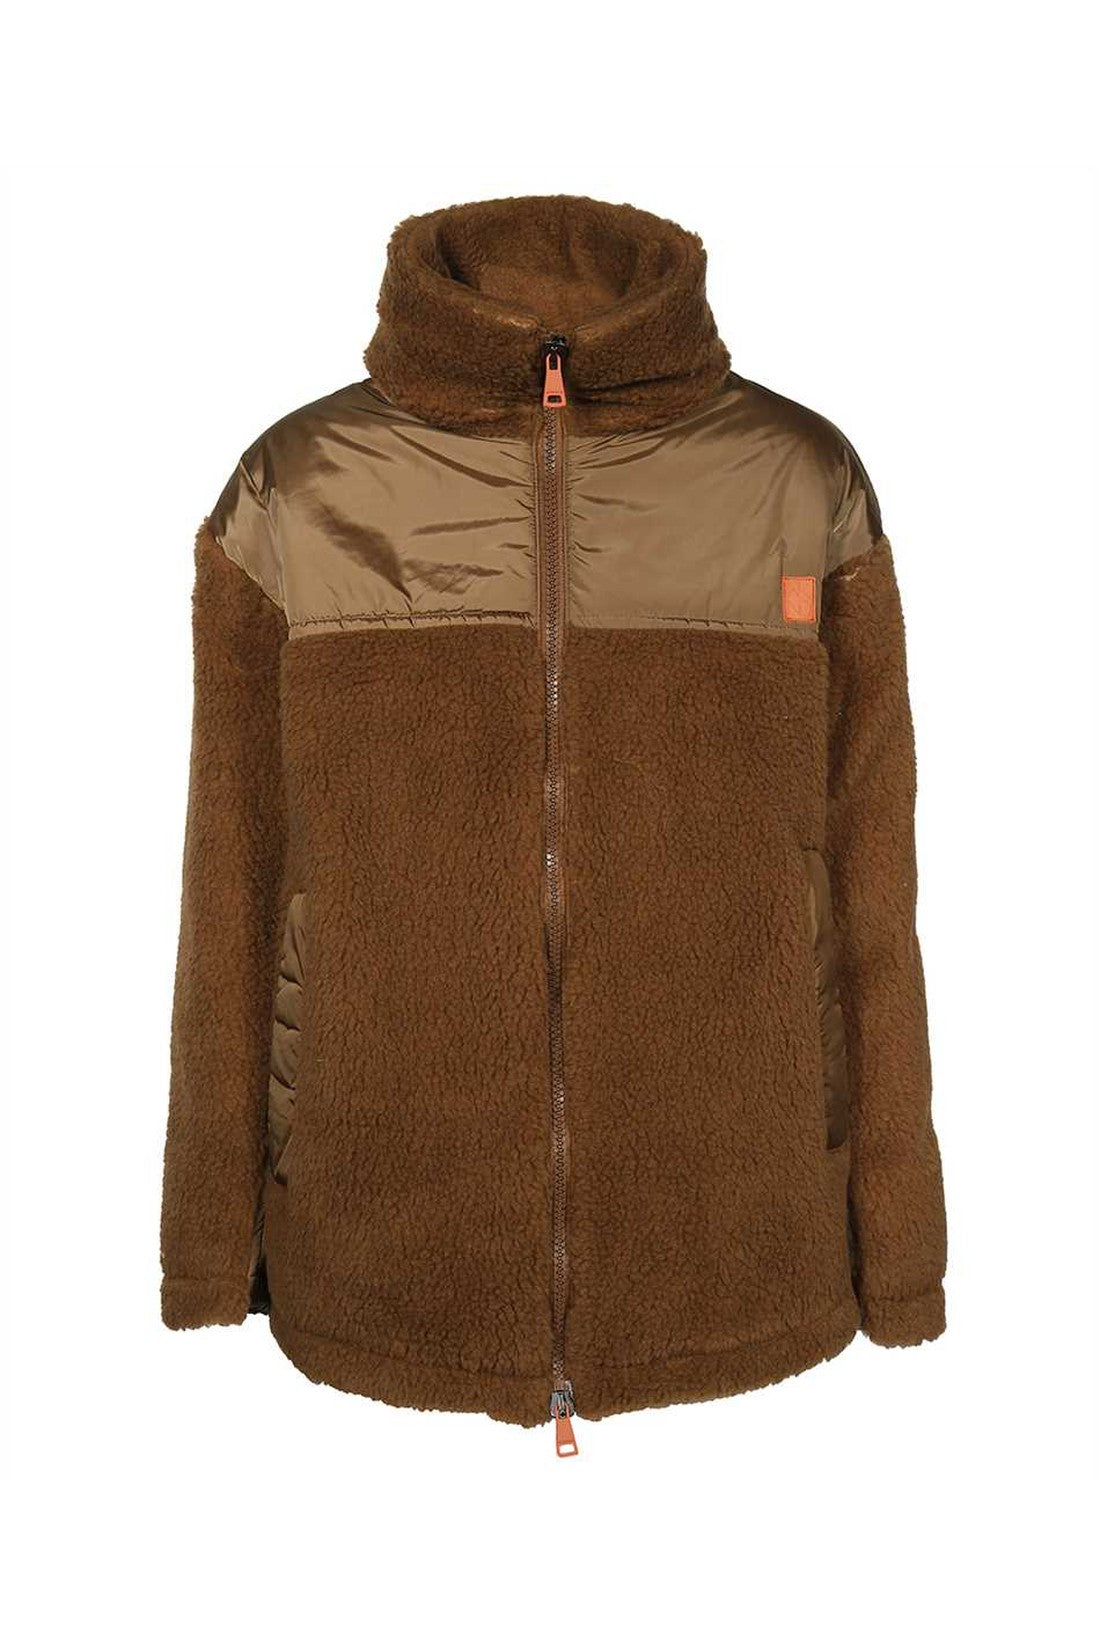 Fleece jacket-Weekend Max Mara-OUTLET-SALE-32-ARCHIVIST